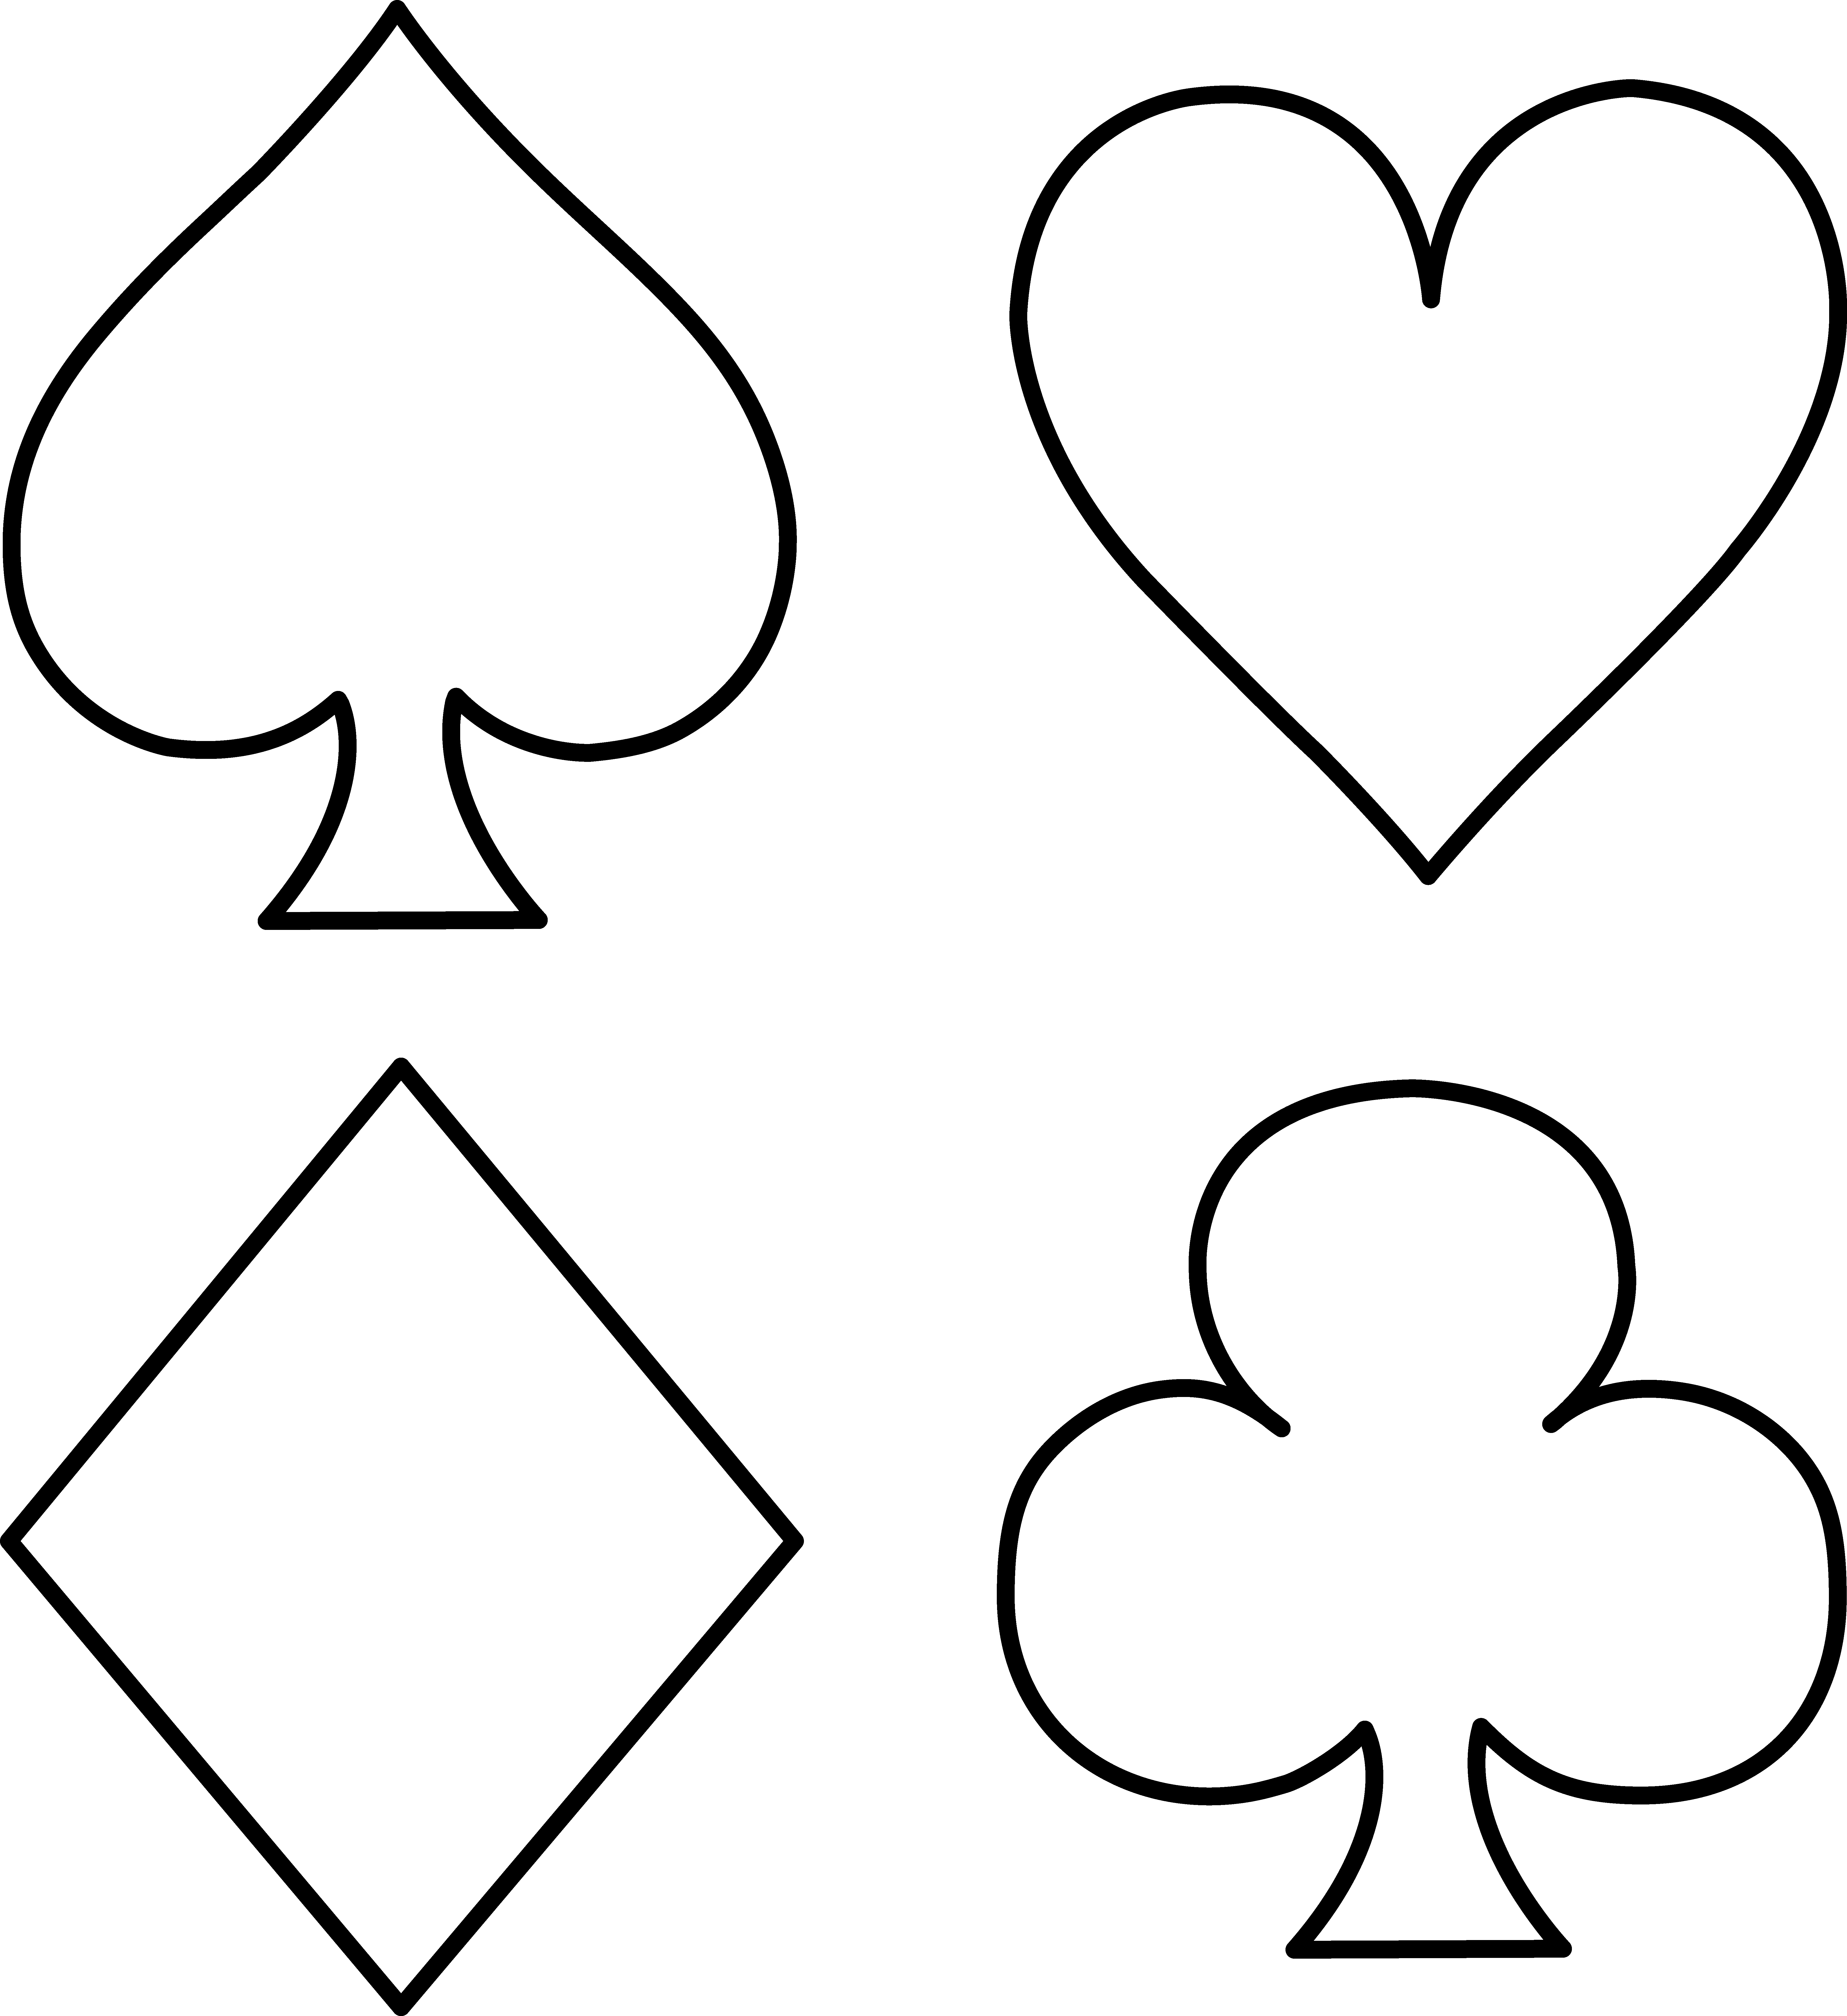 0 Result Images of Simbolos Cartas De Poker Para Colorear - PNG Image ...